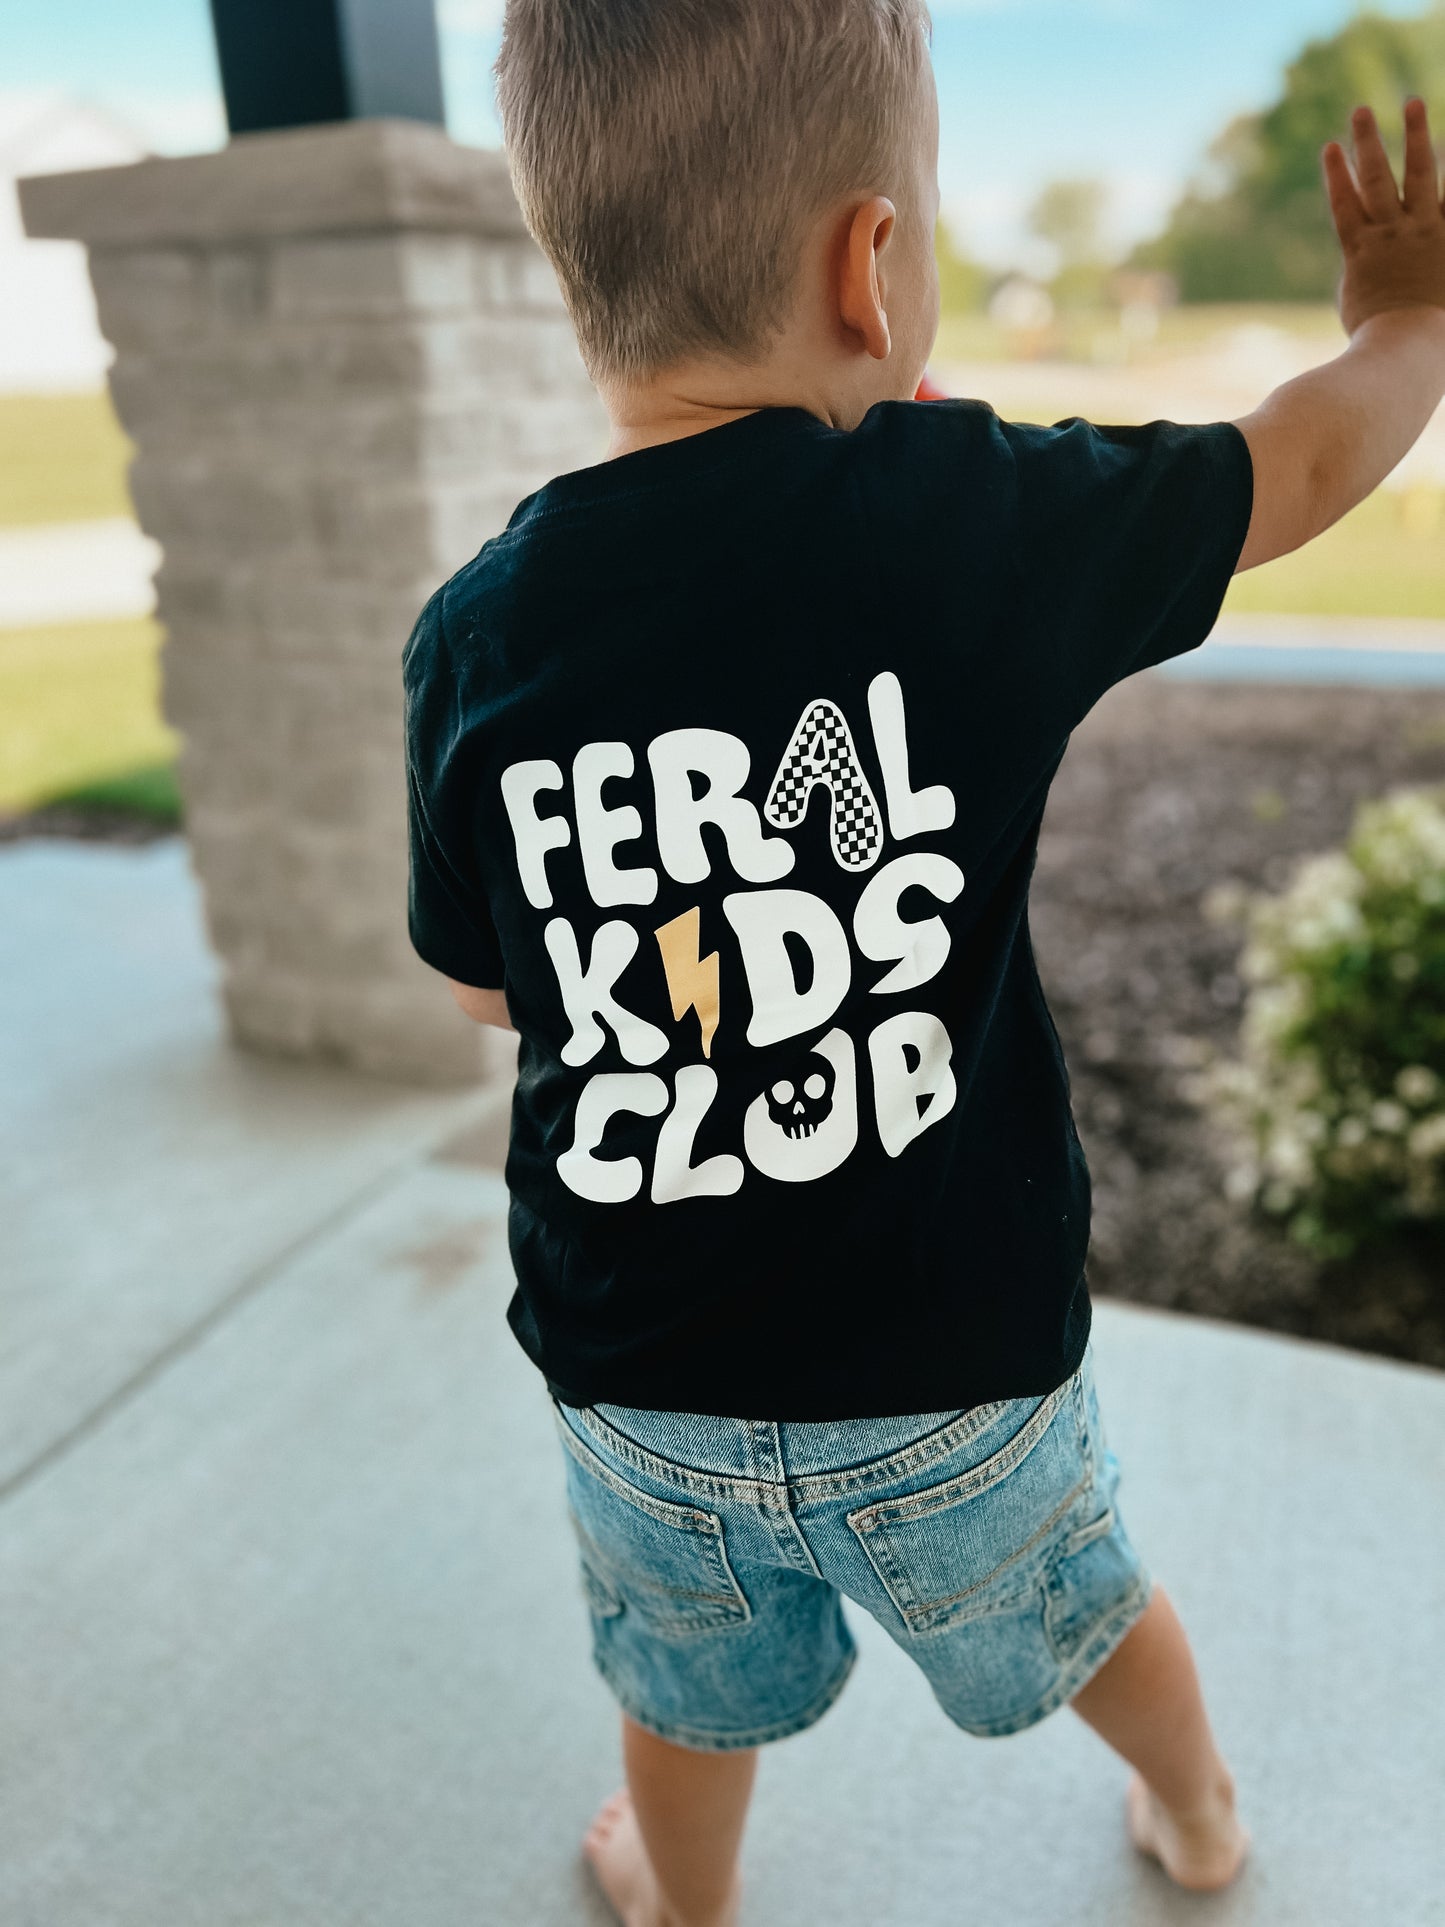 Feral Kids Club Tee